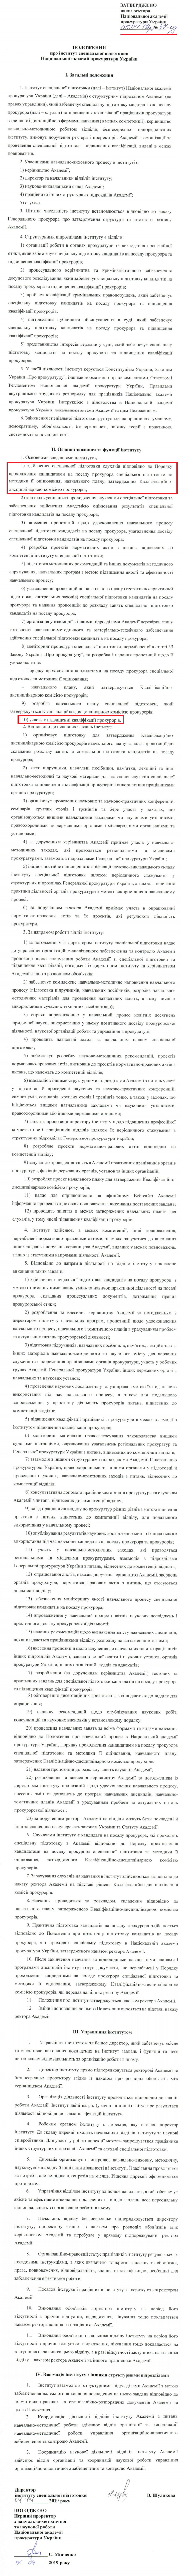 http://napu.com.ua/wp-content/uploads/2019/05/POLOZHENNYA-pro-Institut-SP_02.05.2019.pdf